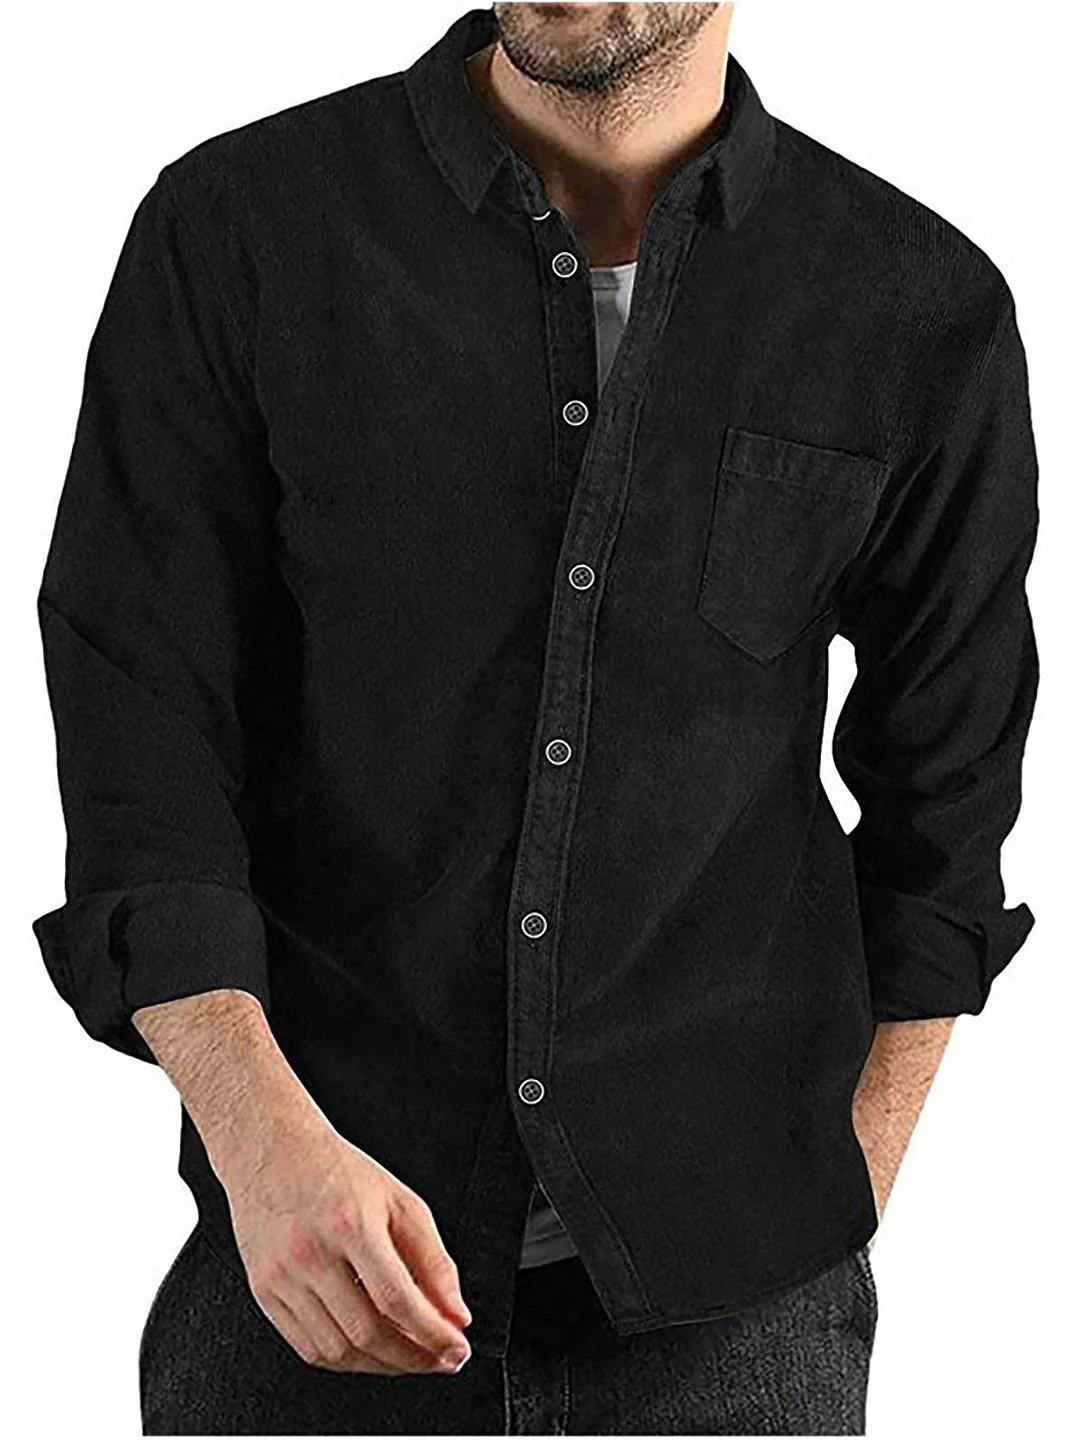 Men's Long Sleeve Casual Vintage Pocket Shirt